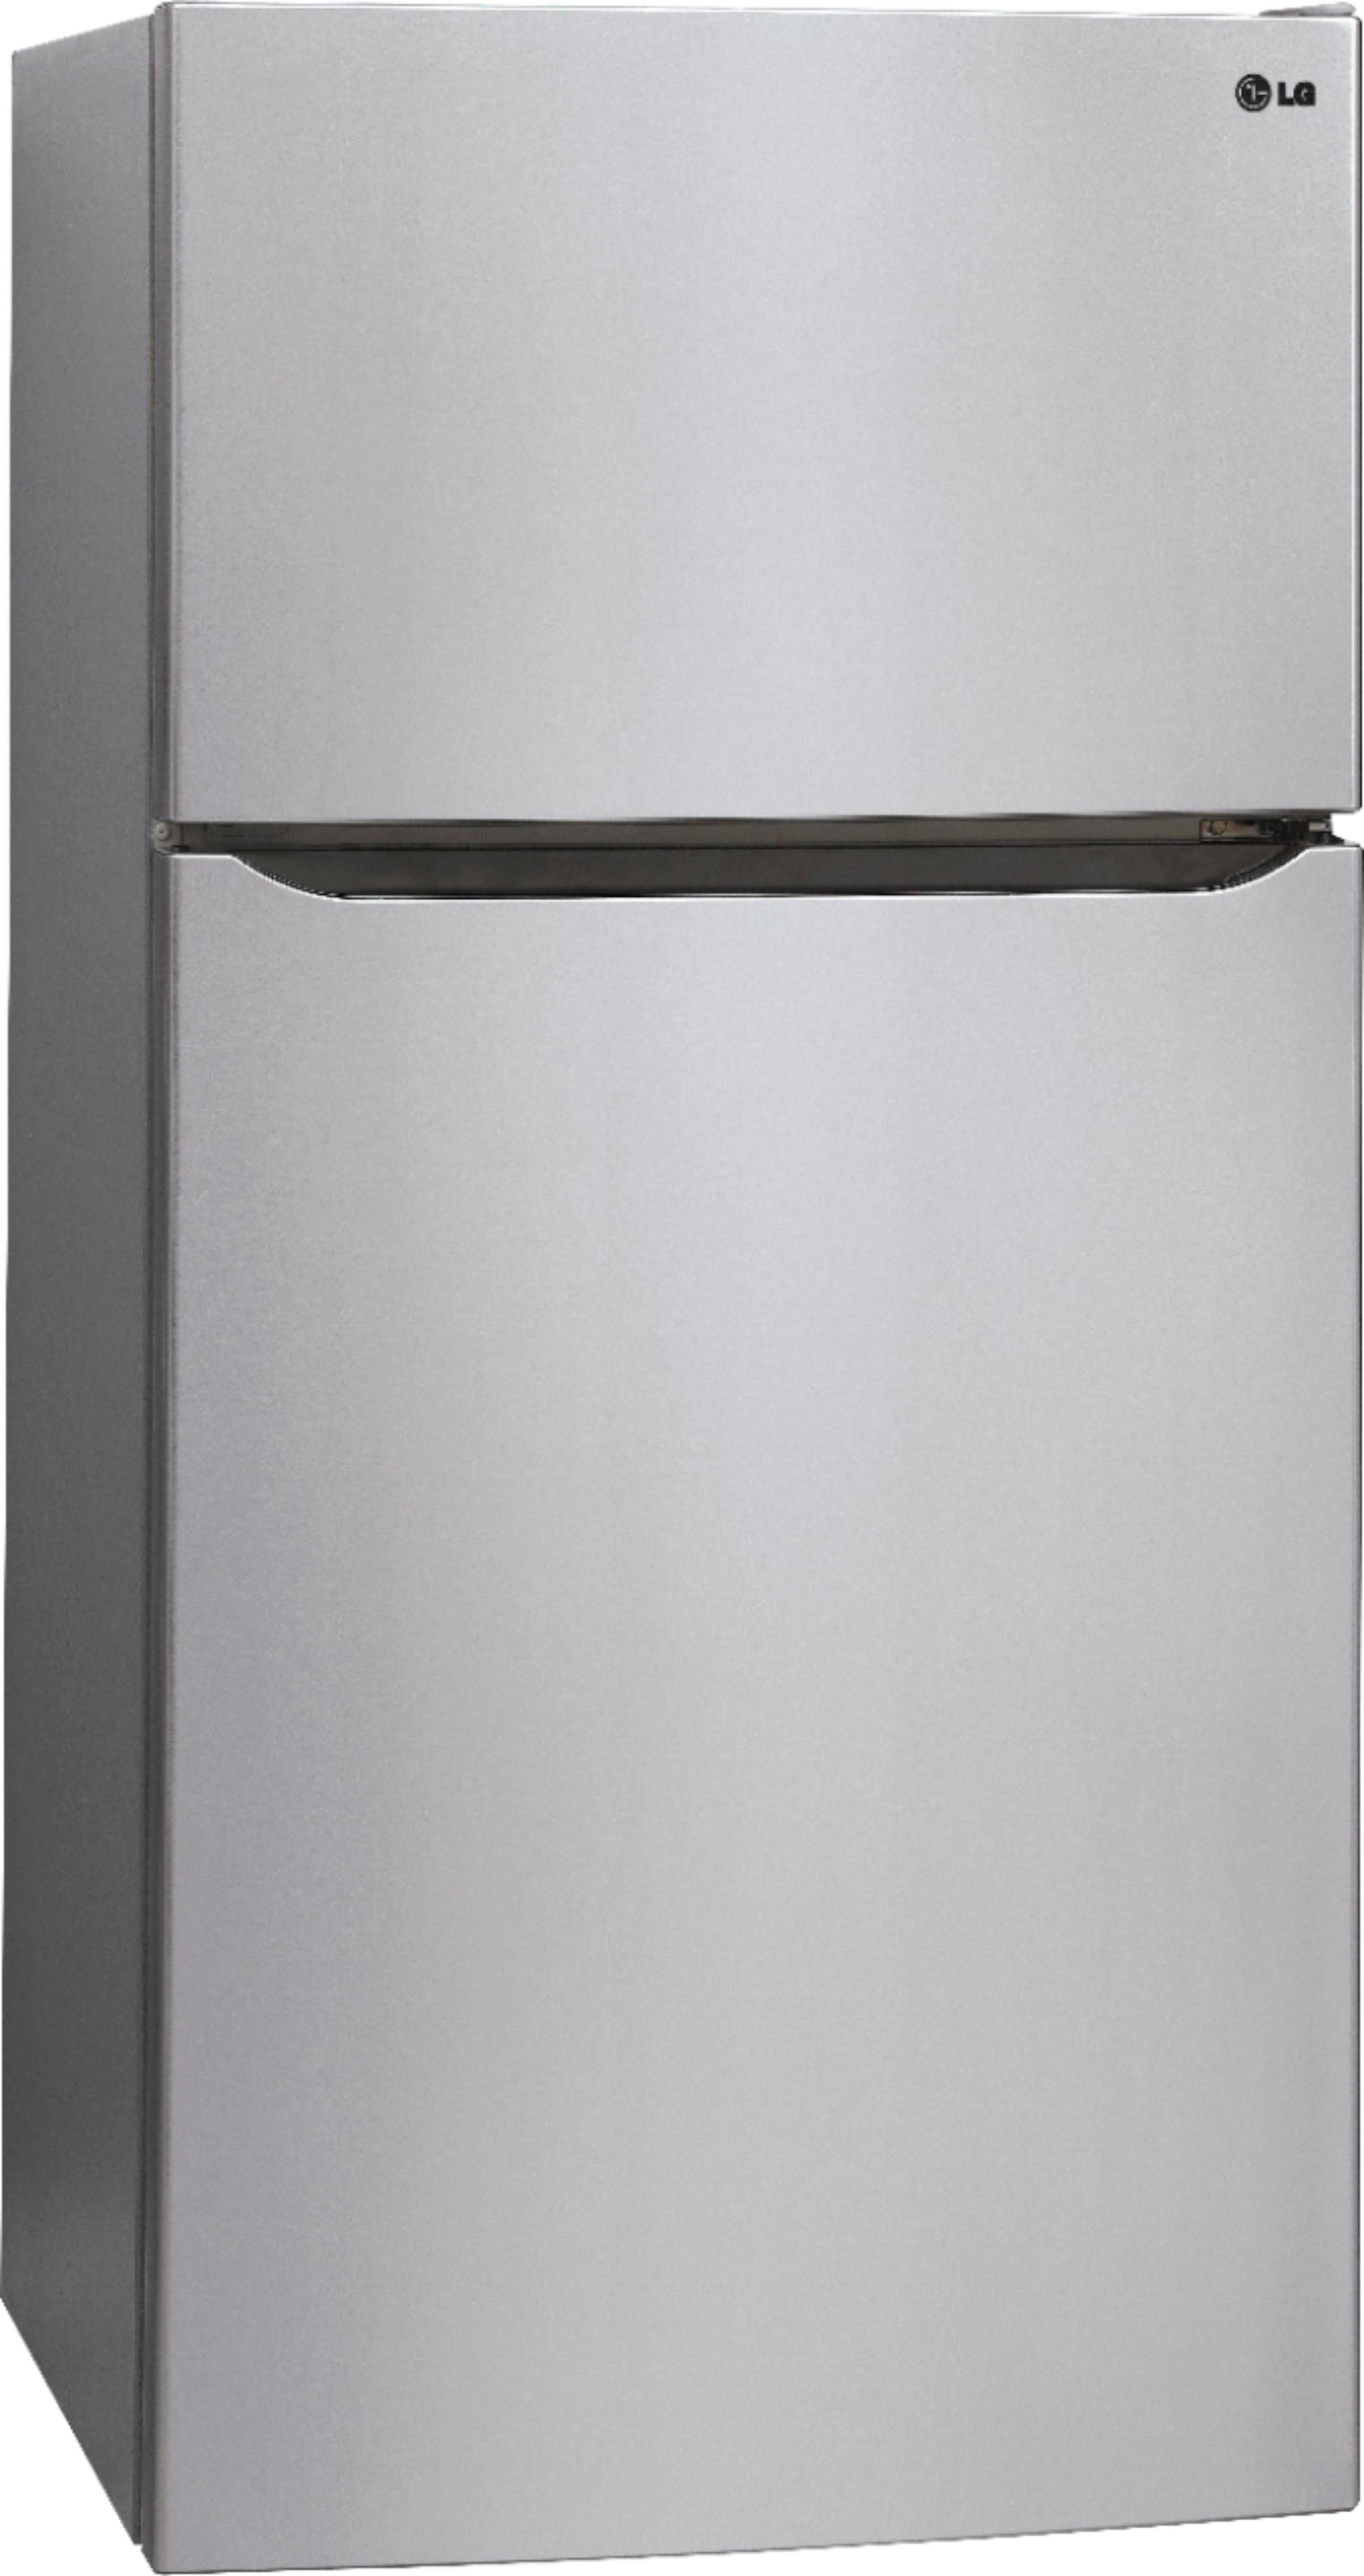 Angle View: Amana - 22.1 Cu. Ft. Bottom-Freezer Refrigerator - Stainless steel